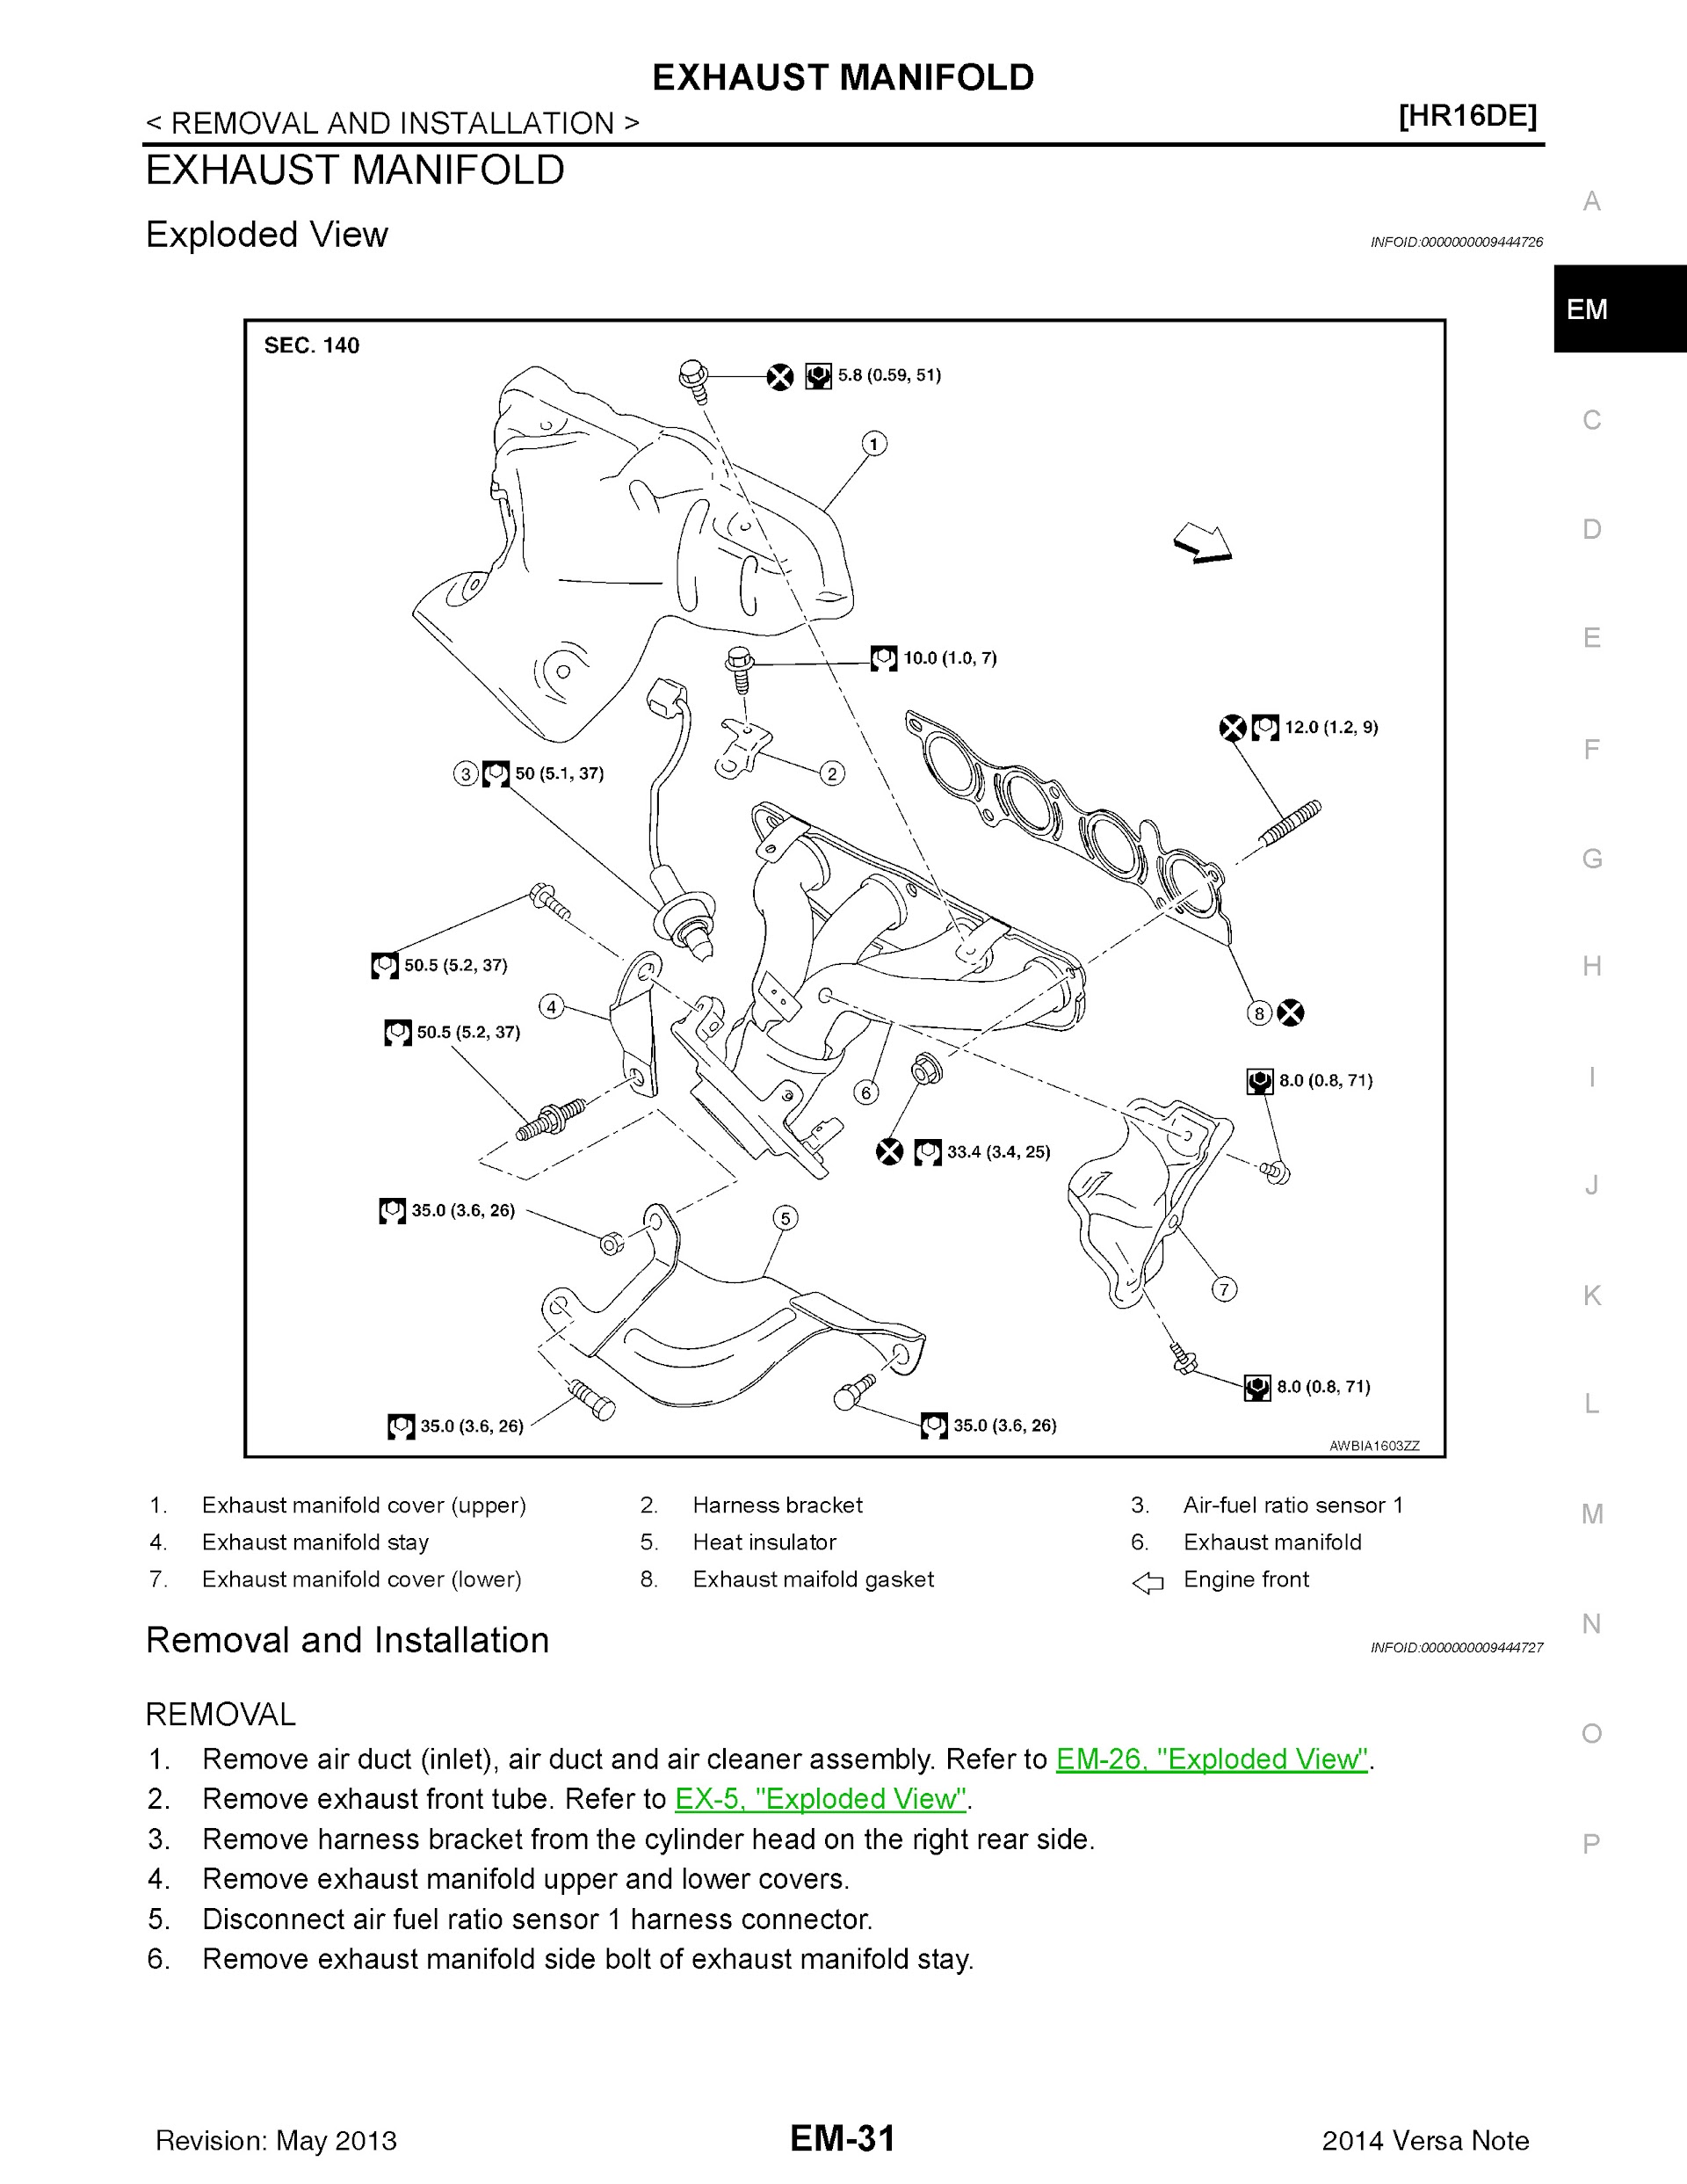 2014 Nissan Versa Note Repair Manual, Exhaust Manifold